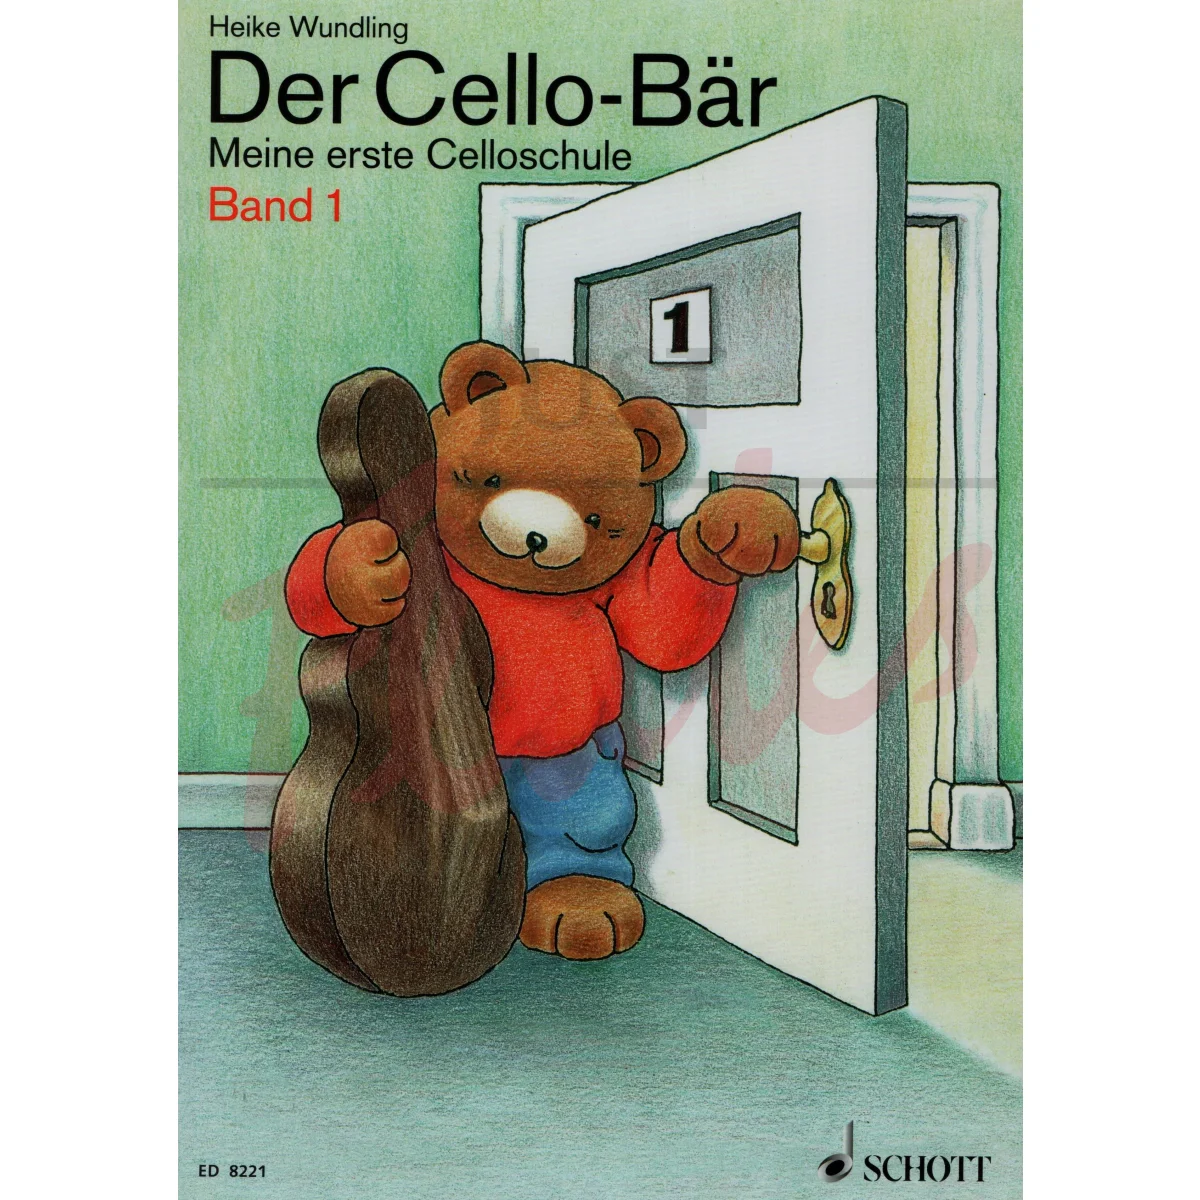 Der Cello-Bär Band 1 [German Edition]